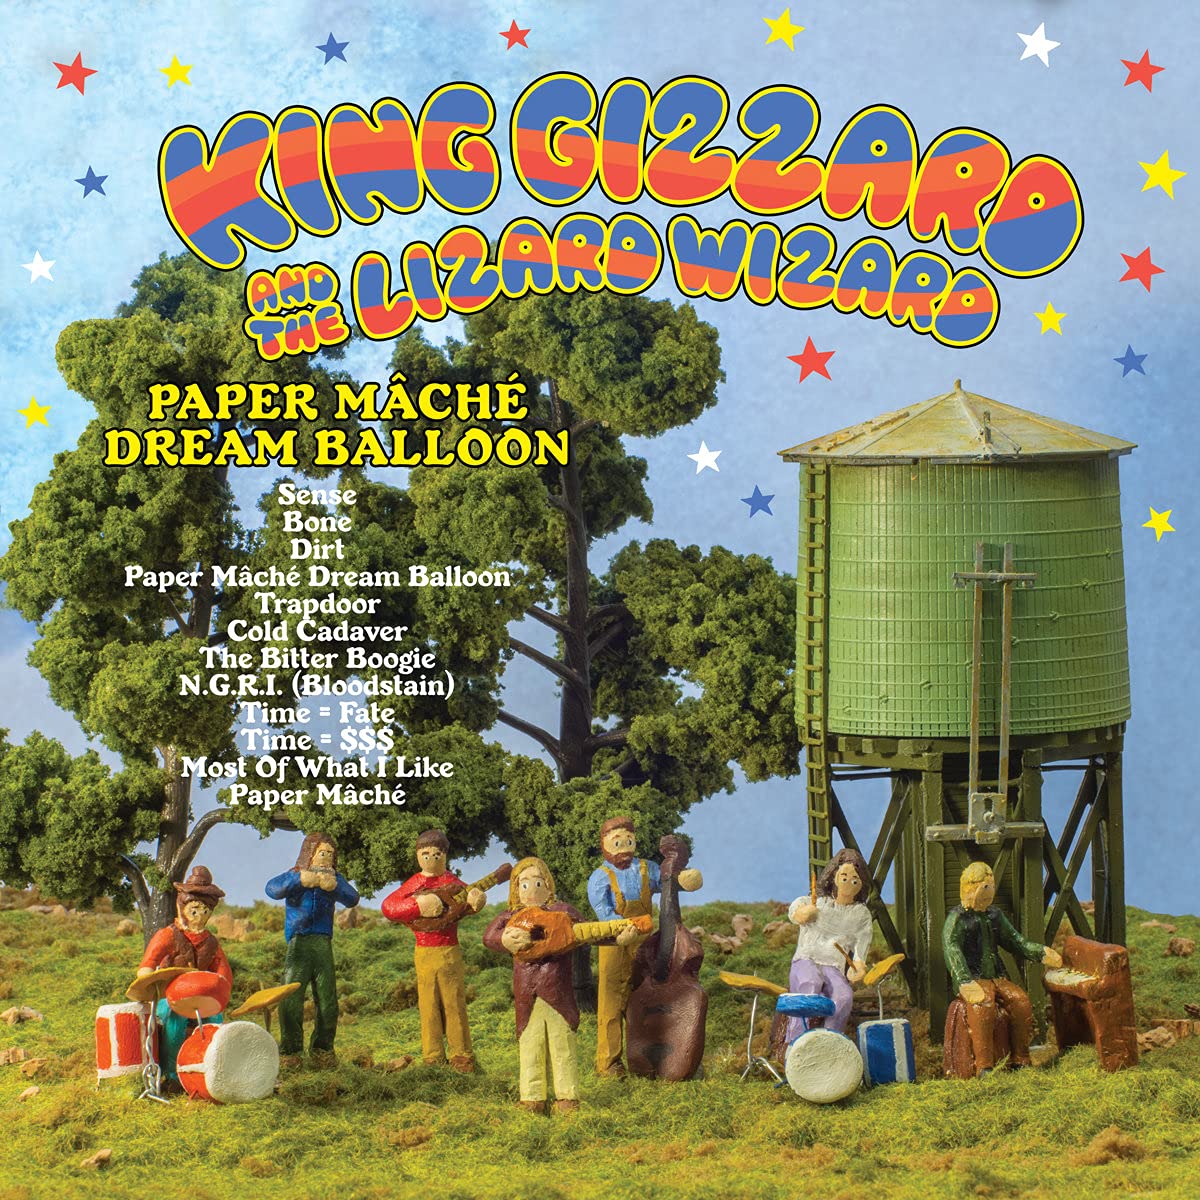 King Gizzard and the Lizard Wizard - Paper Mache Dream Balloon [Deluxe Lemon & Mango Colored Vinyl]